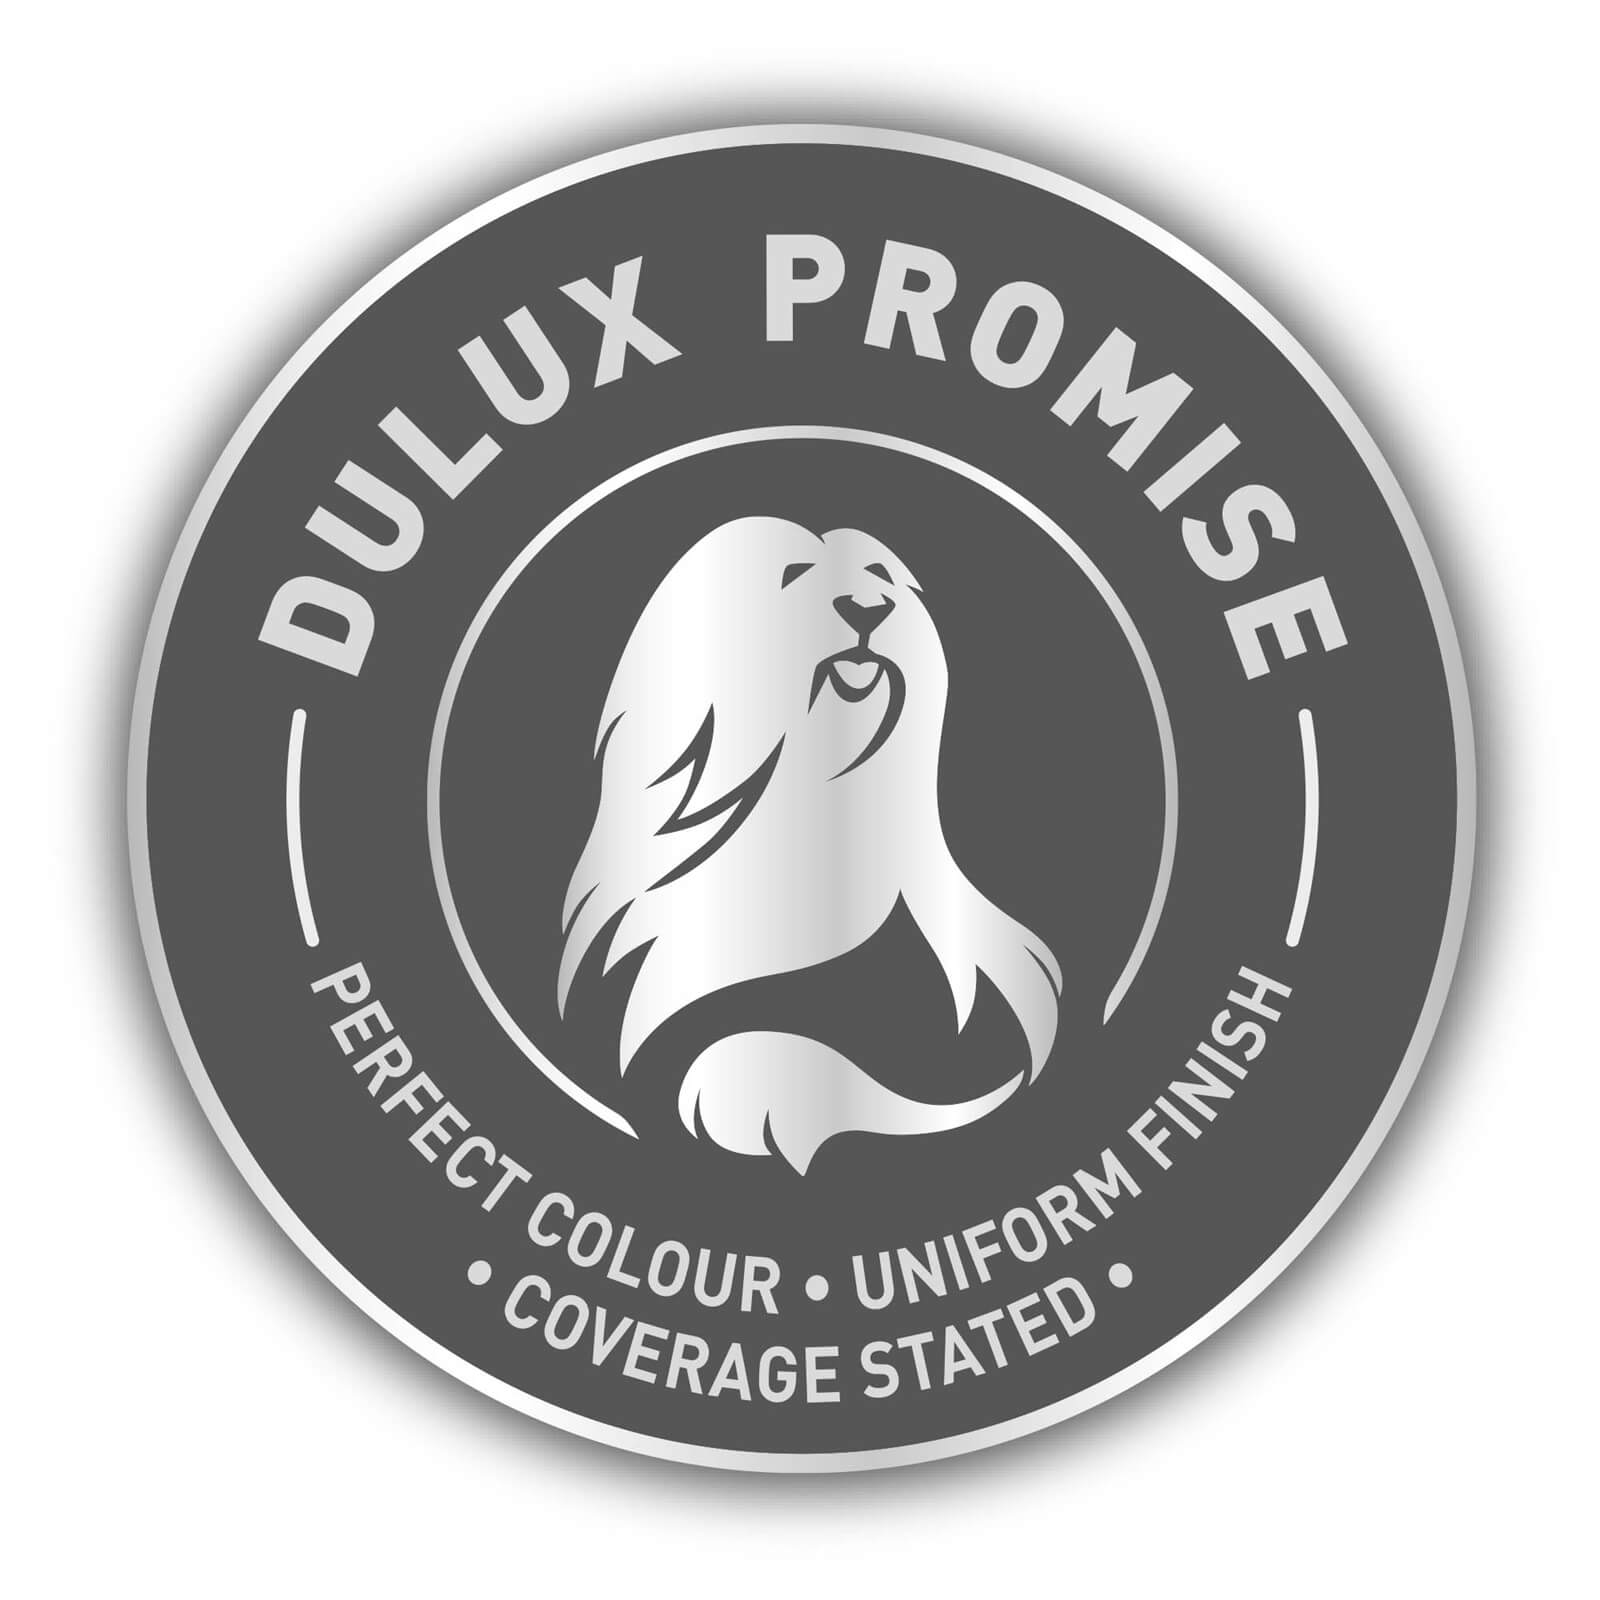 Dulux Silk Emulsion Paint Summer Linen - 5L